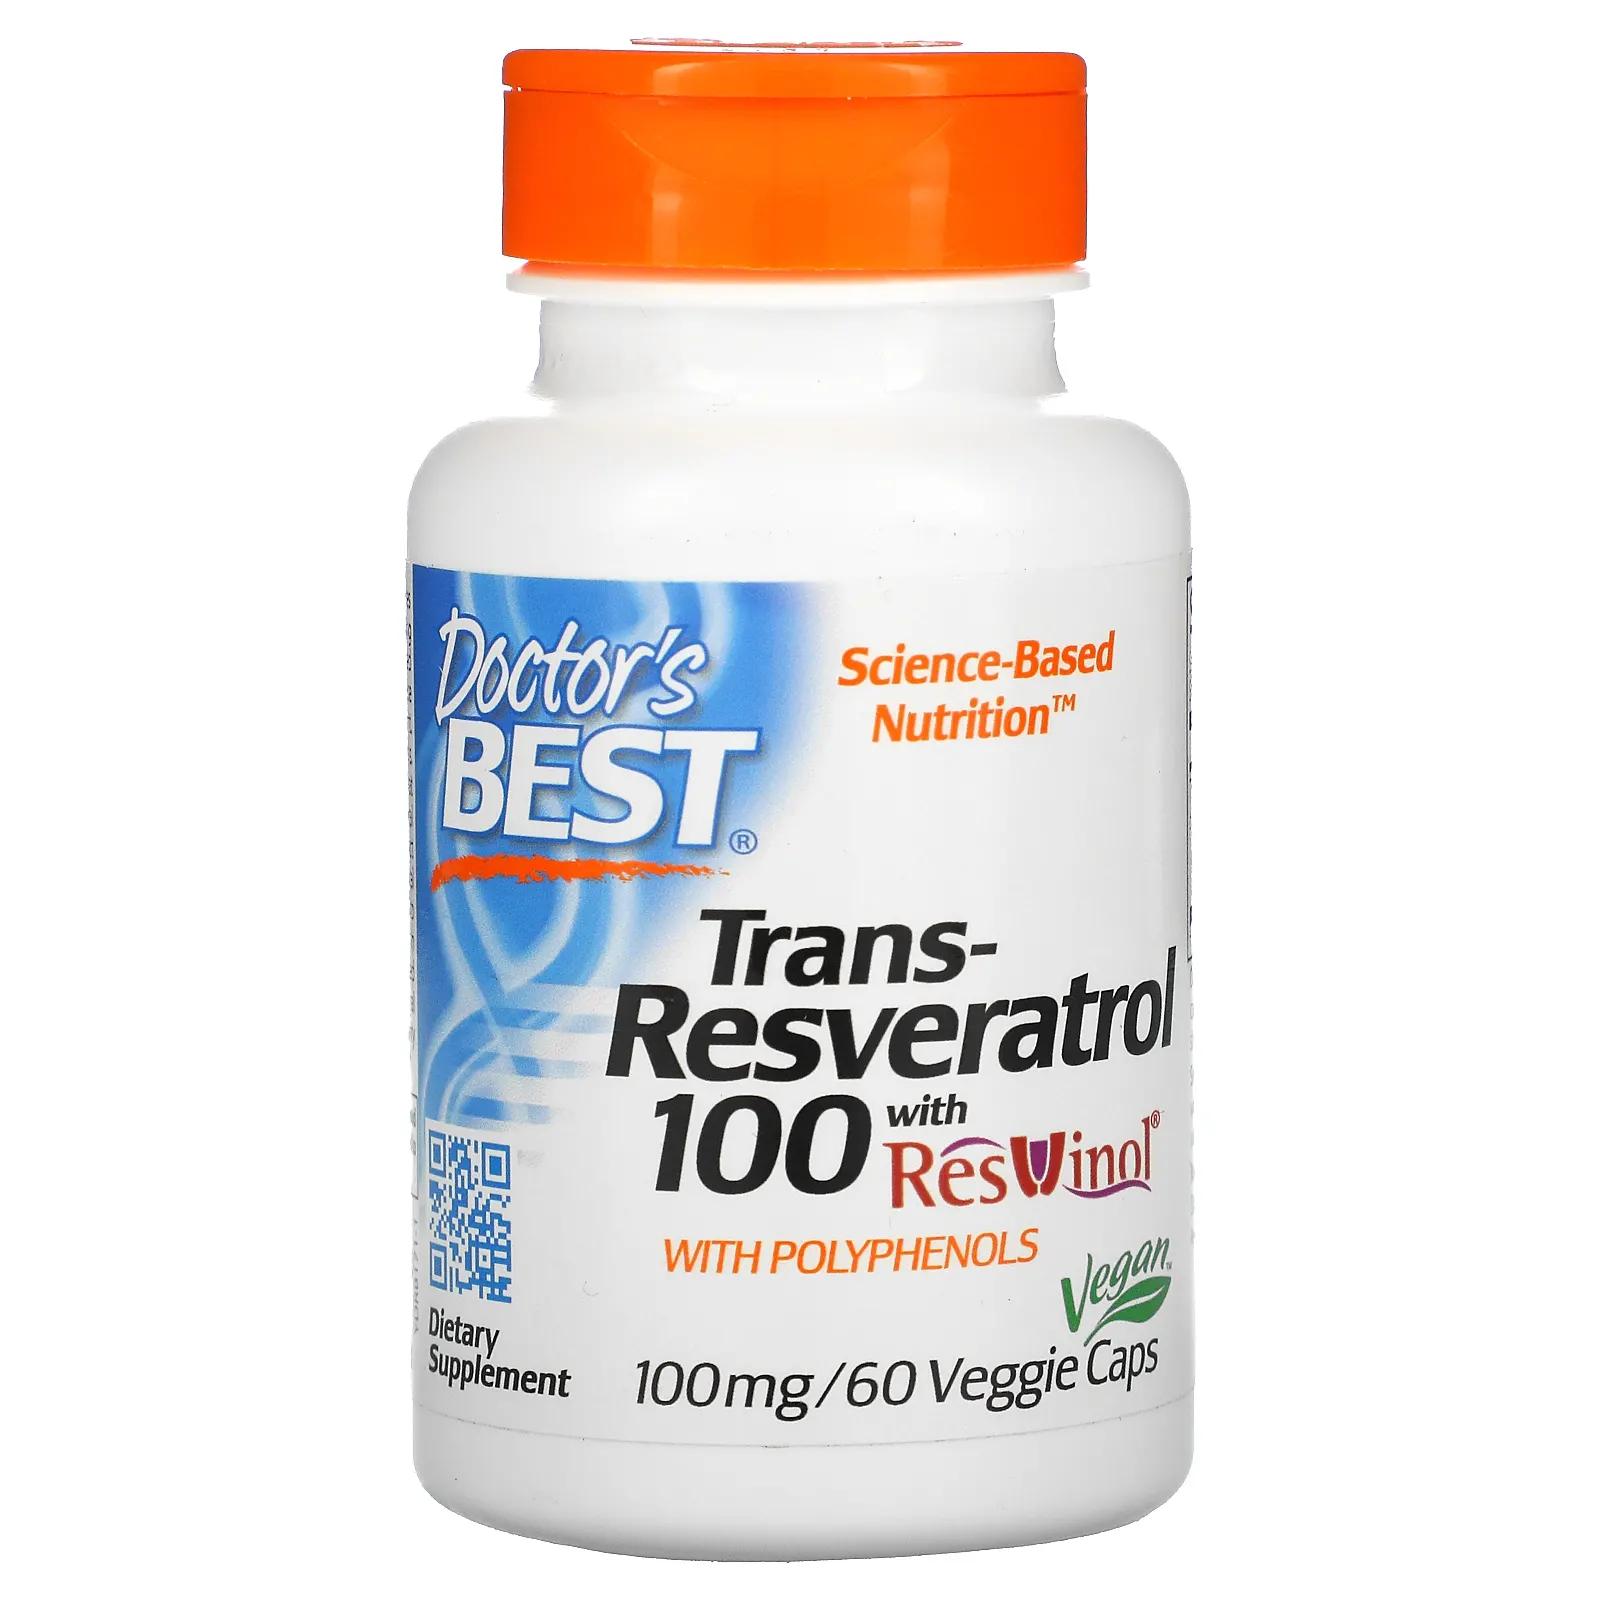 Doctor's Best Trans-Resveratrol with Resvinol 100 mg 60 Veggie Caps